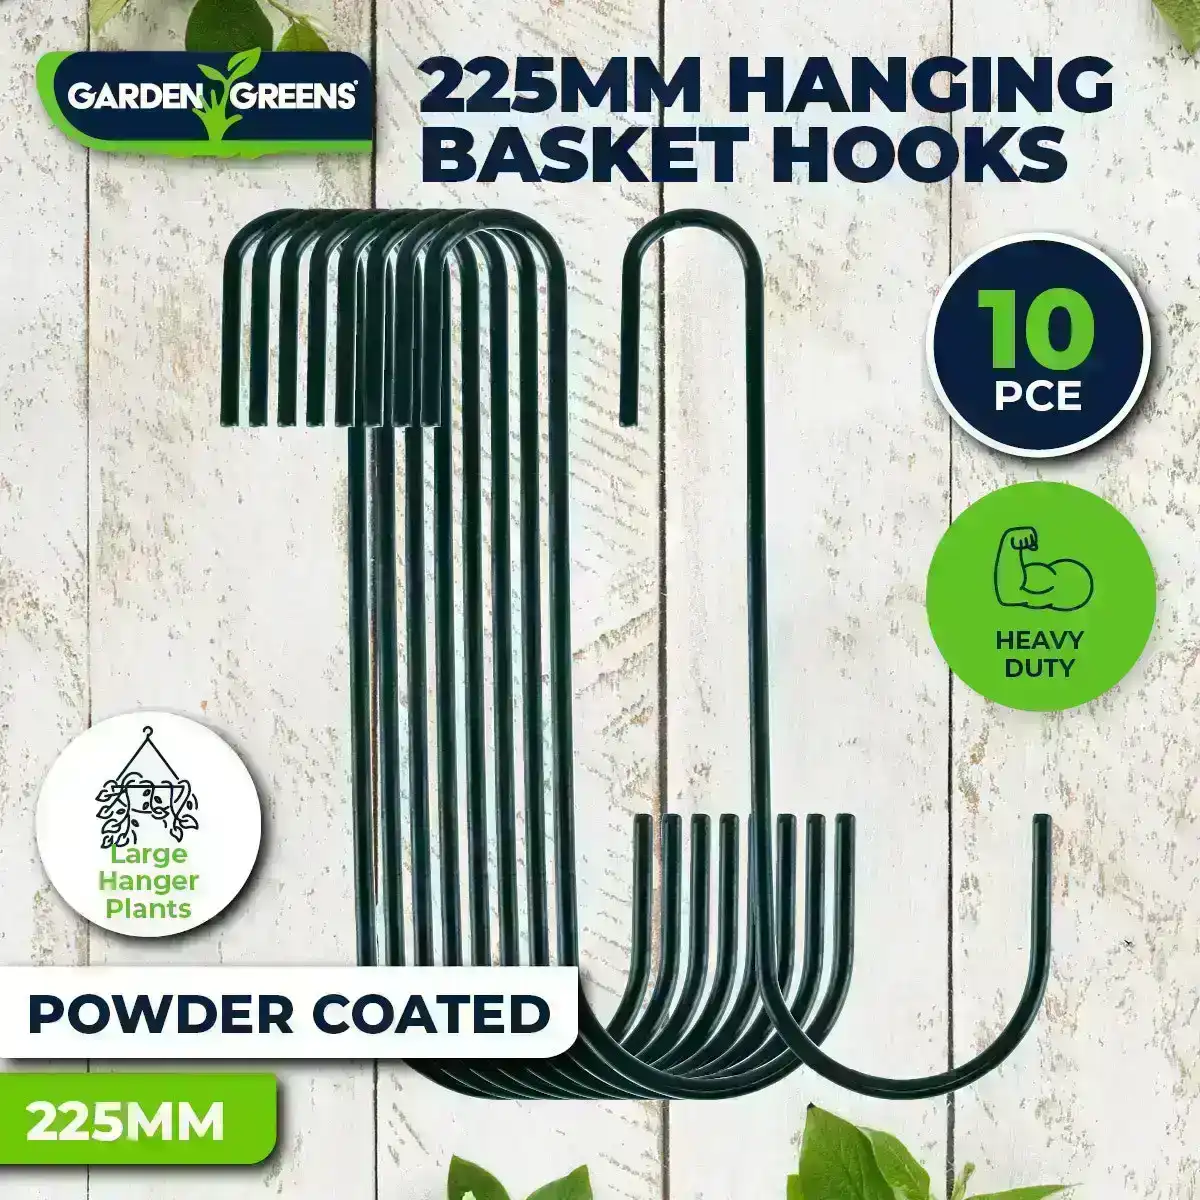 Garden Greens® 10PCE Hanging Basket Hooks Powder Coated Easy Hang/Remove 225mm